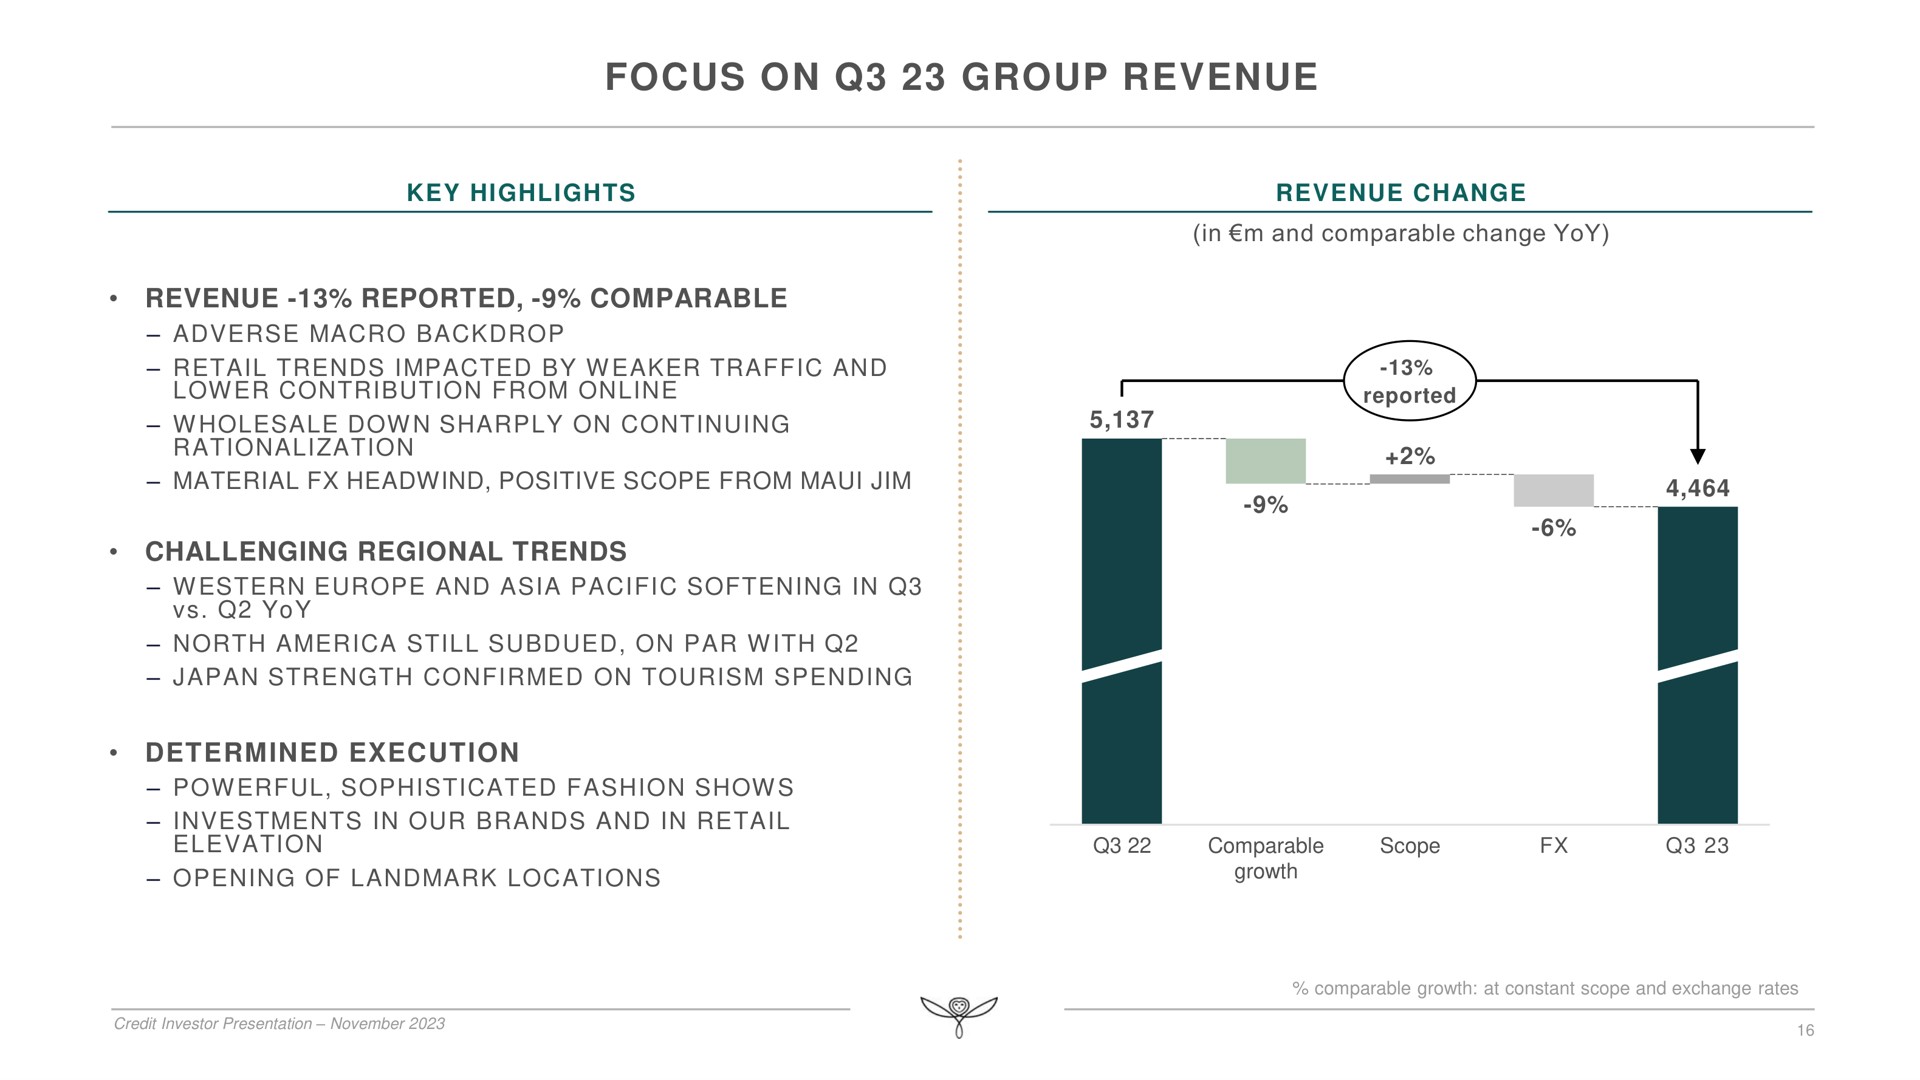 focus on group revenue | Kering